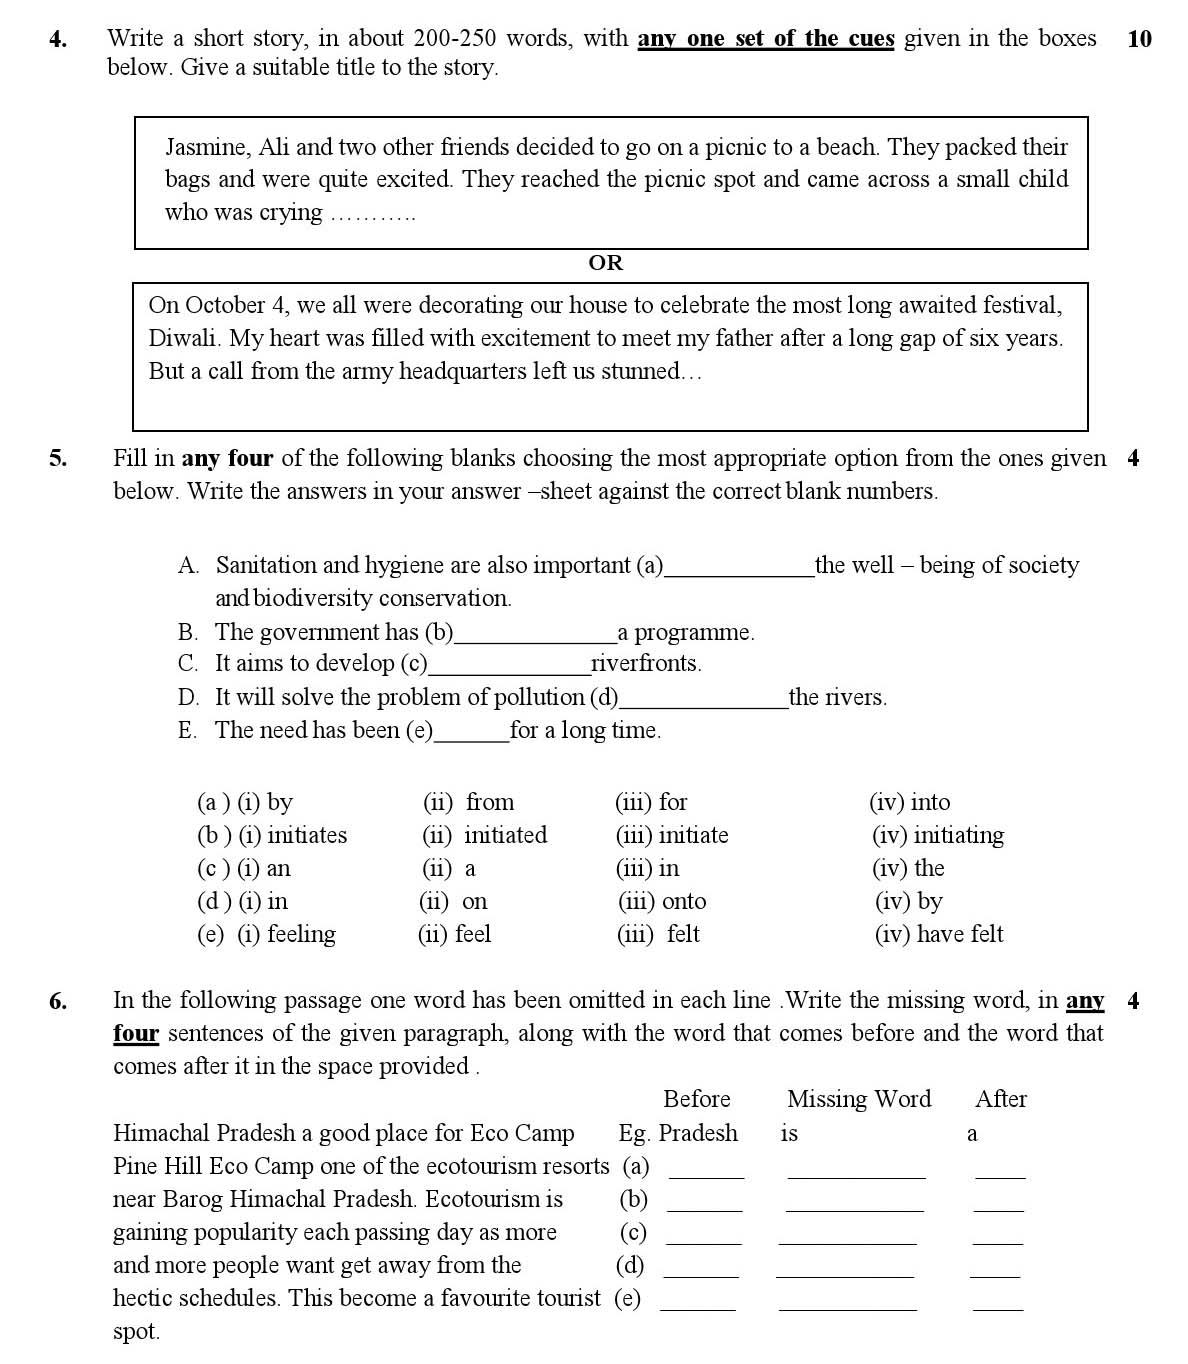 English Communicative CBSE Class X Sample Question Paper 2018 19 - Image 4